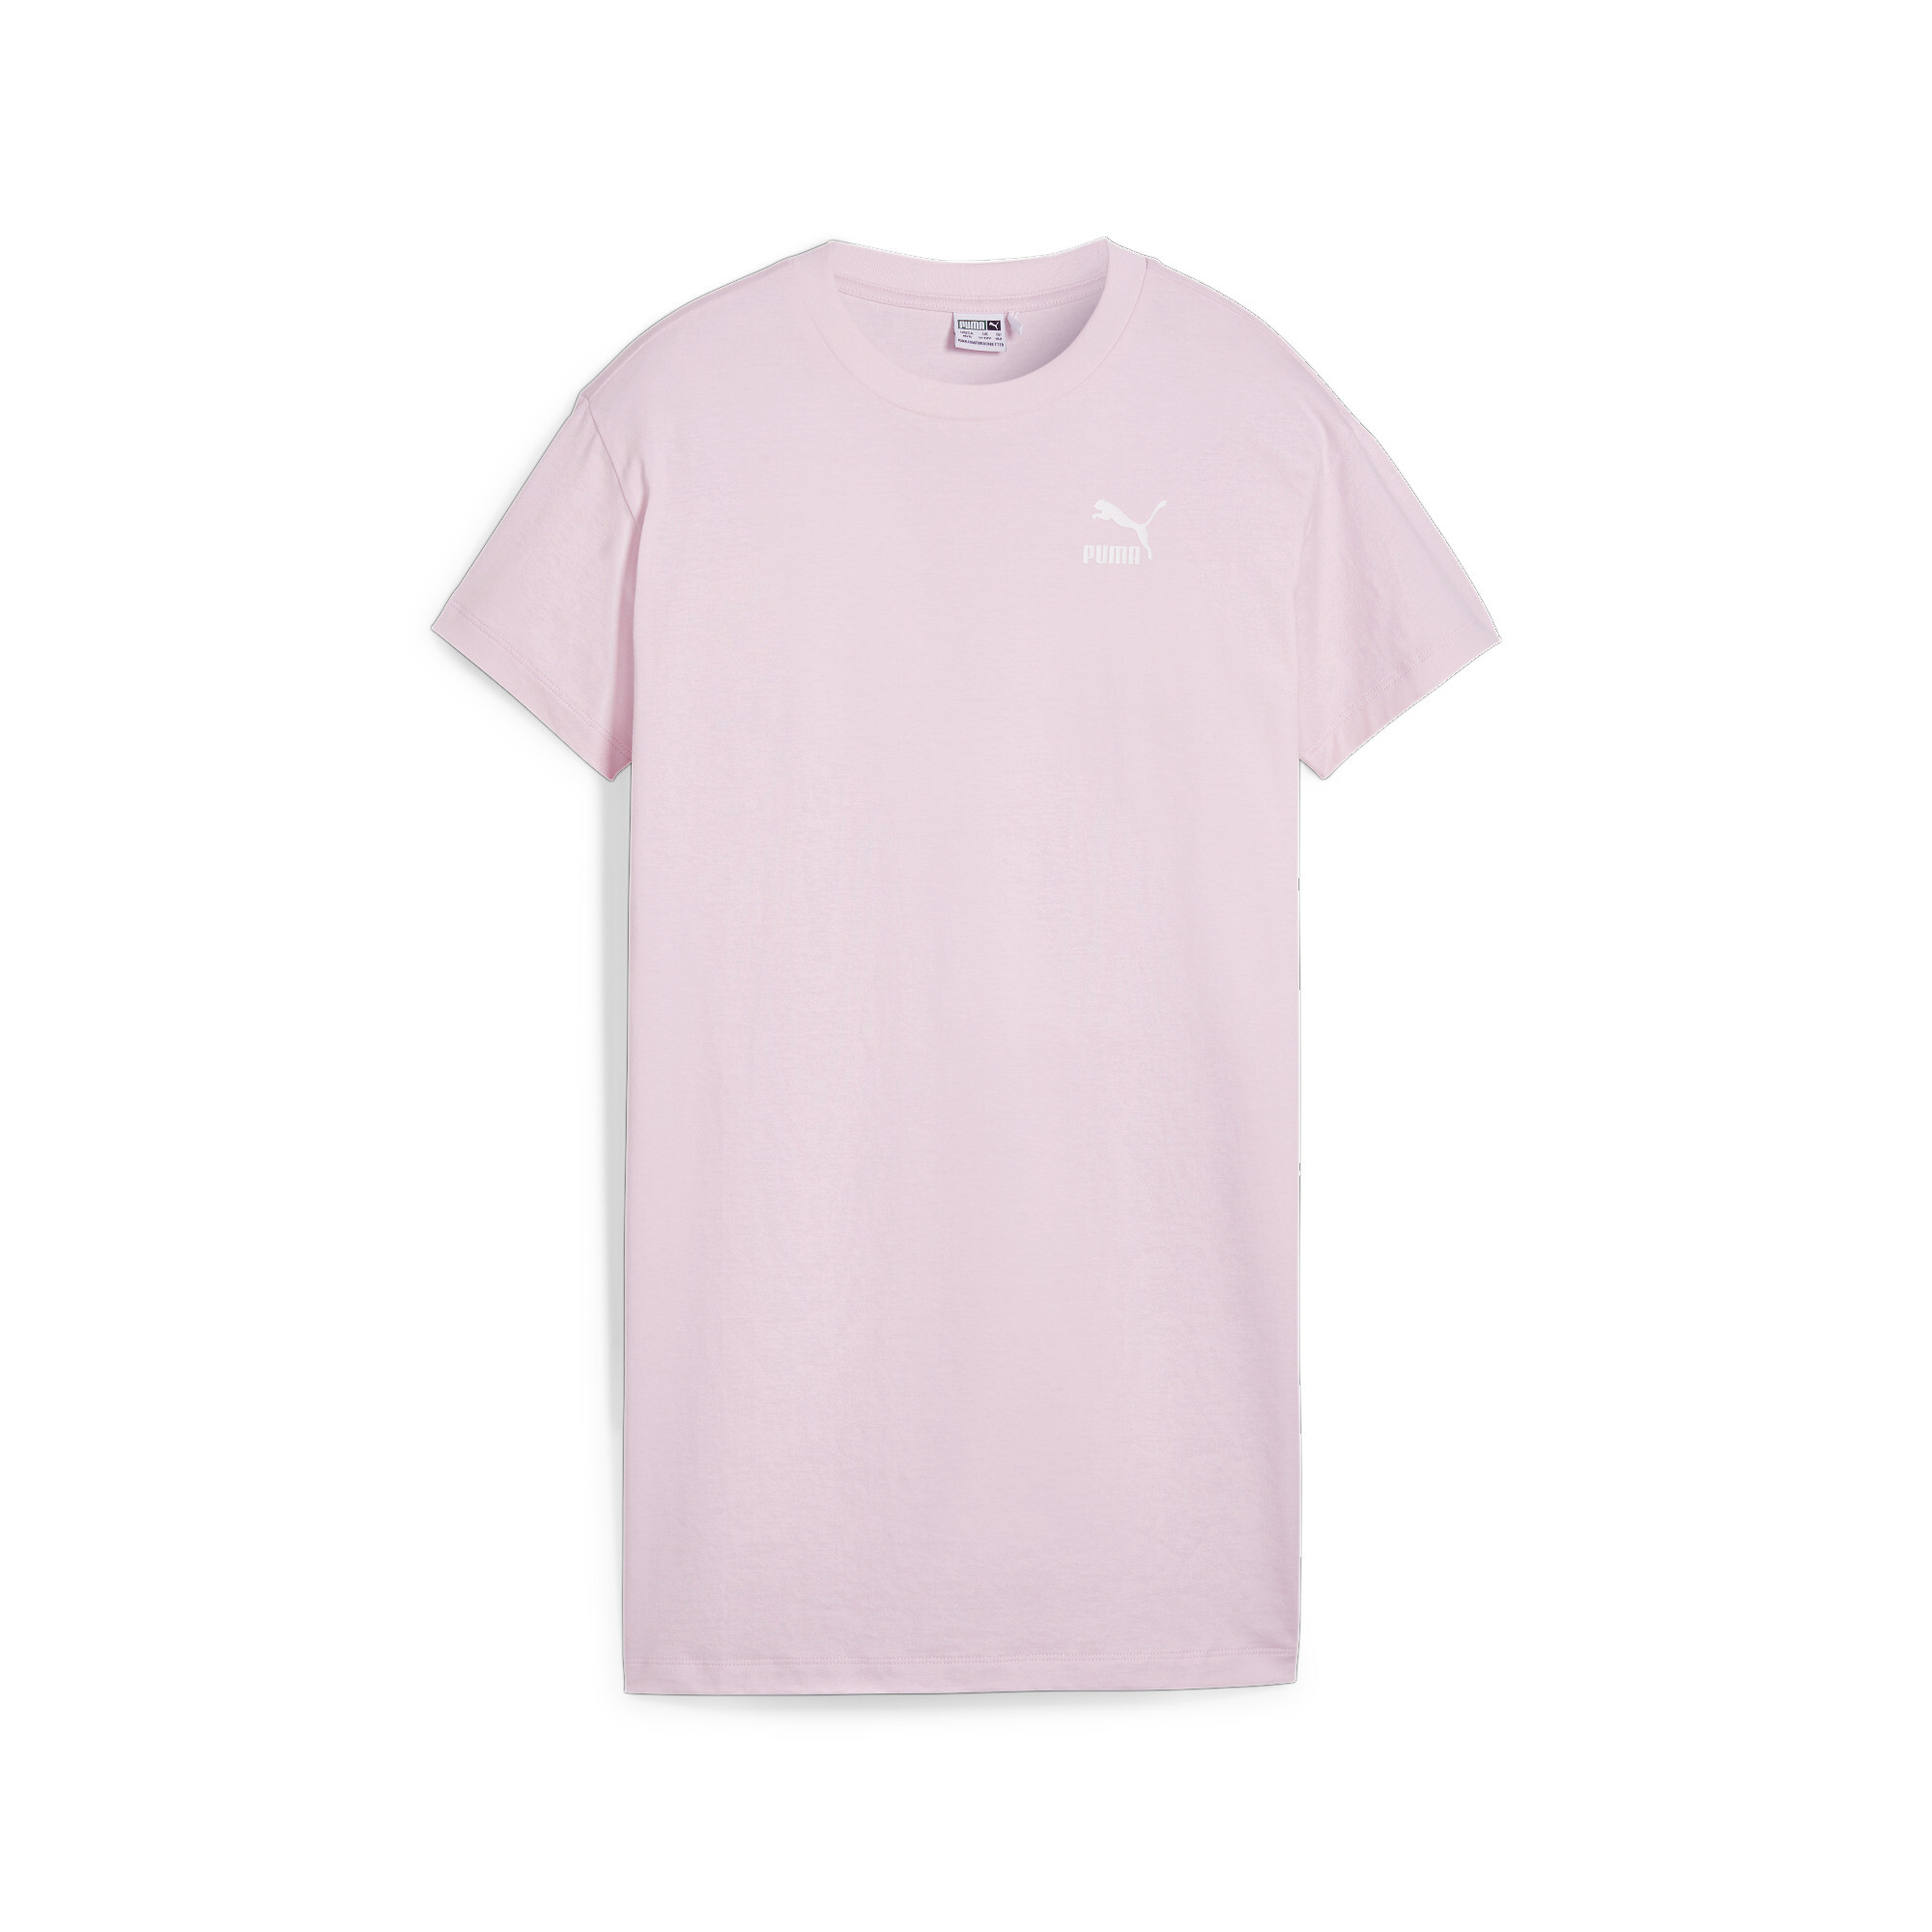 Puma BETTER CLASSICS Girl's Tee Dress, Pink, Size 15-16Y, Shop